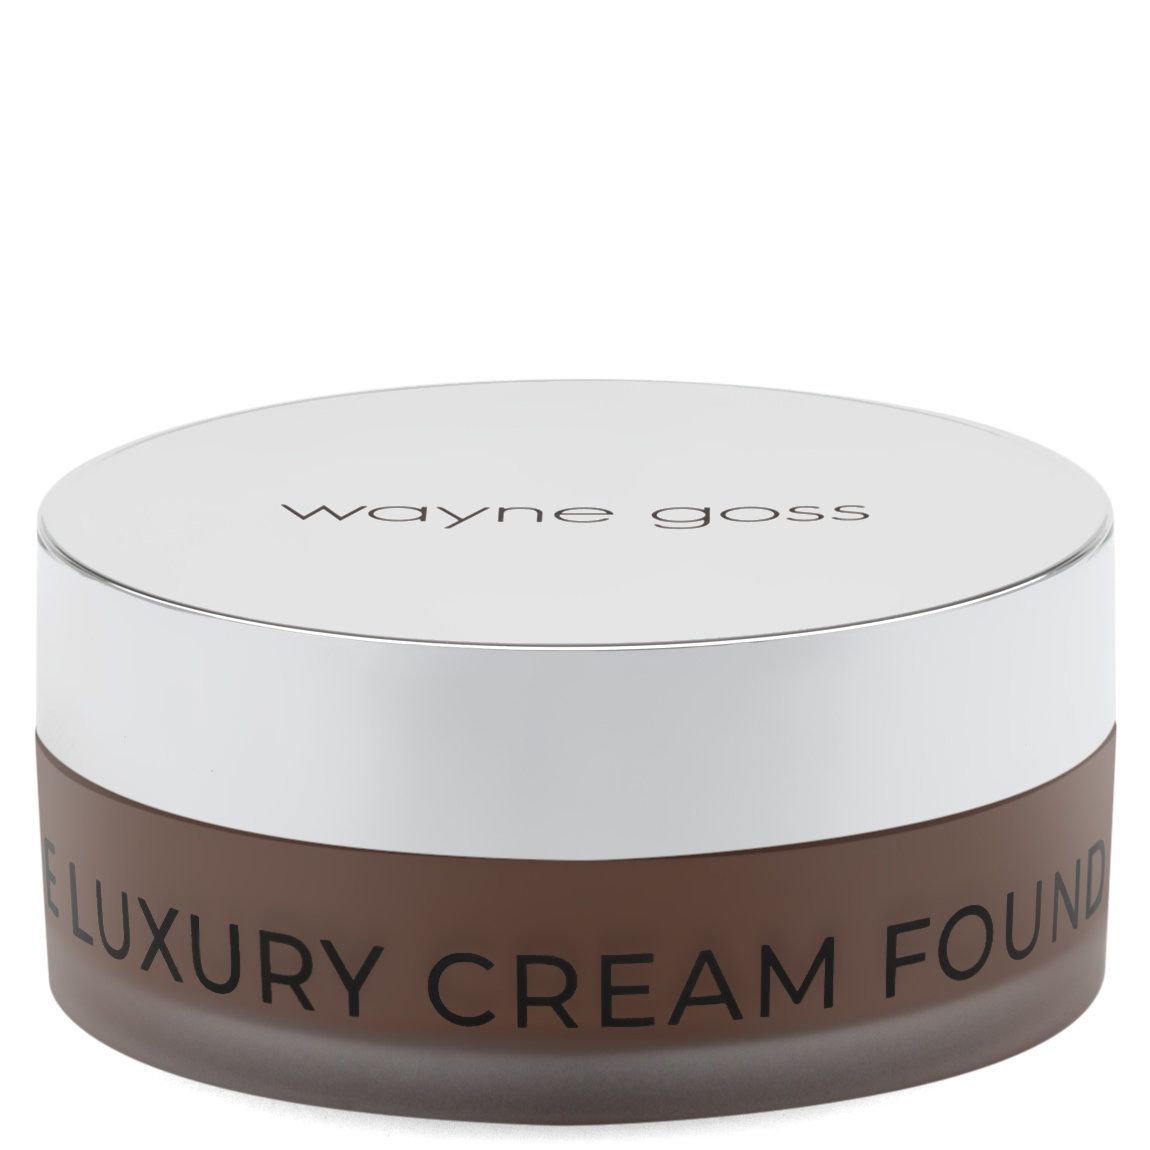 The Luxury Cream Foundation | Beautylish